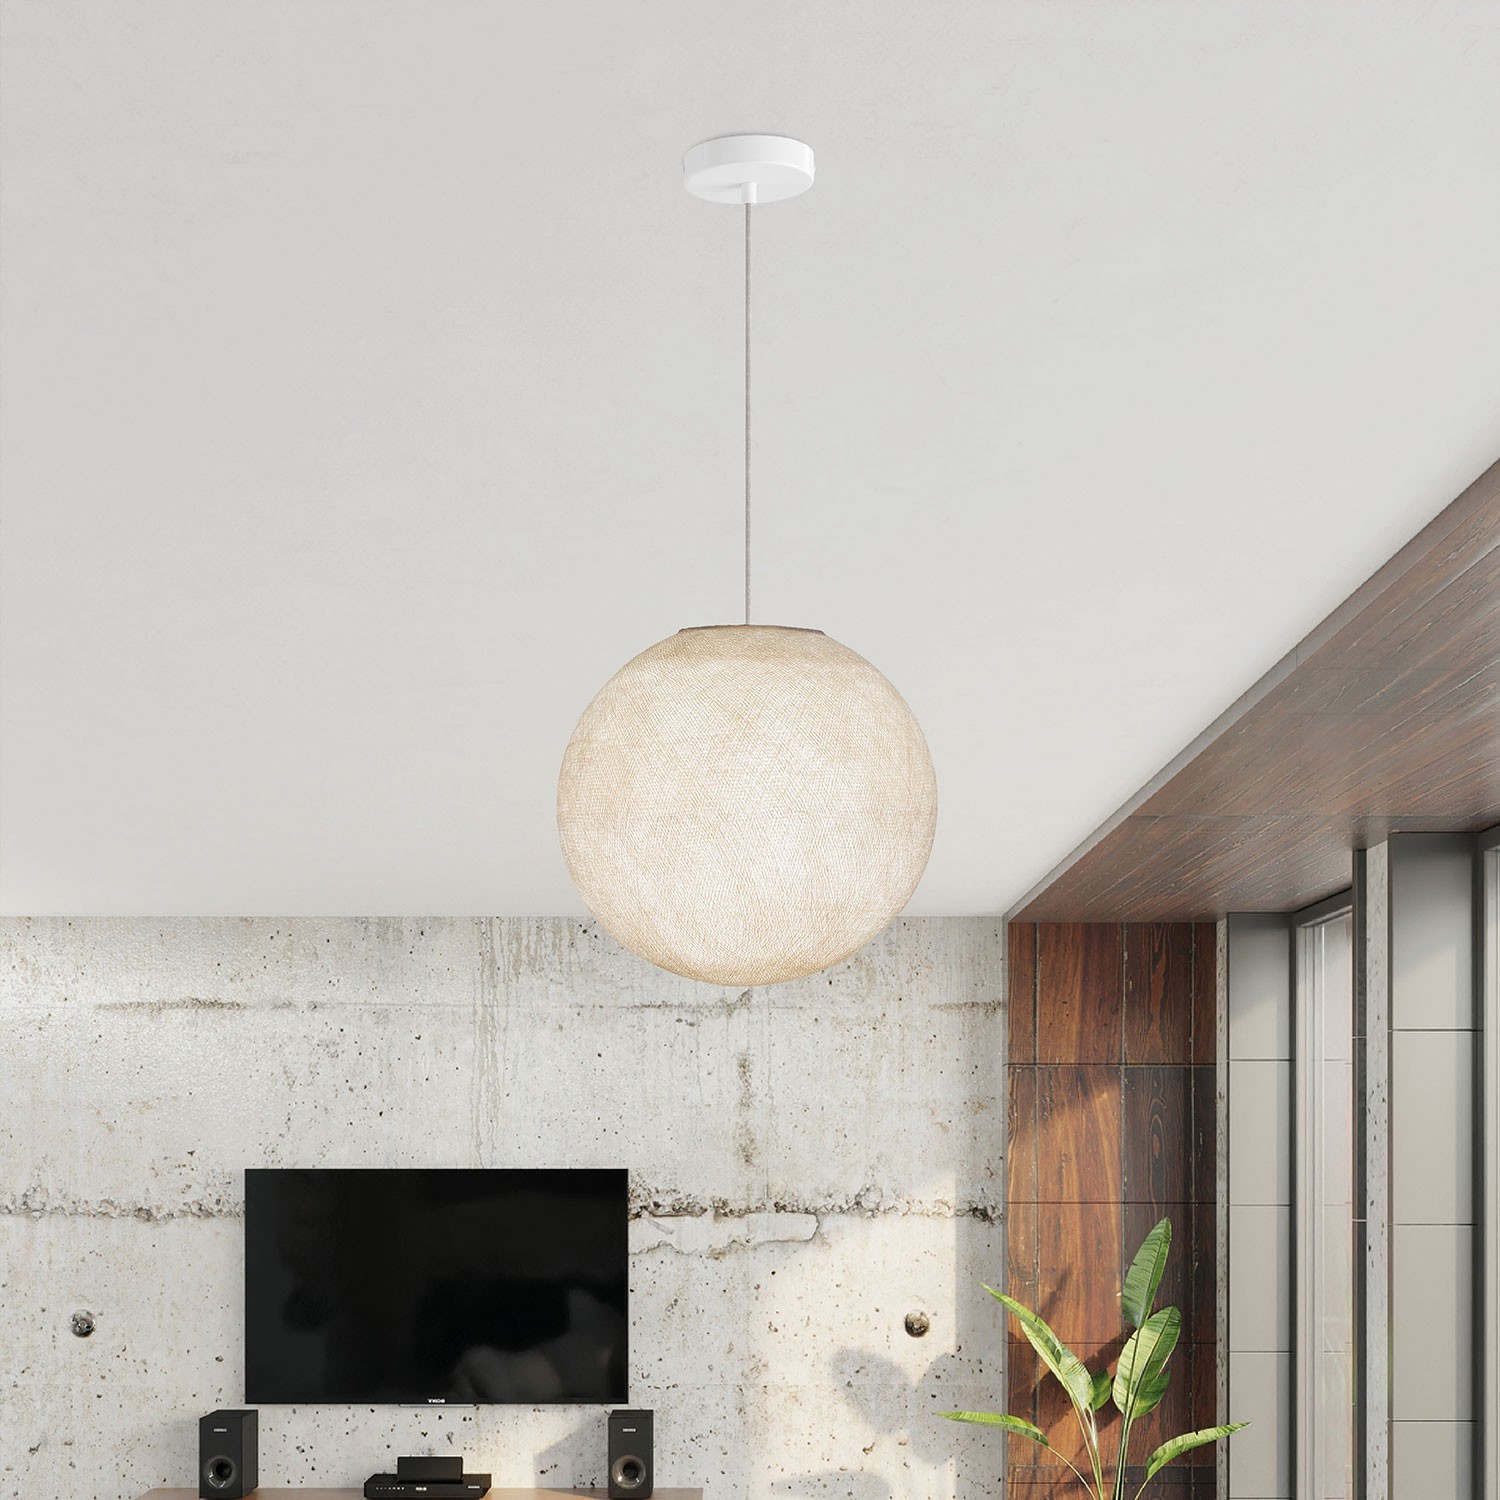 Hanglamp met handgemaakte Sphere Lampenkap